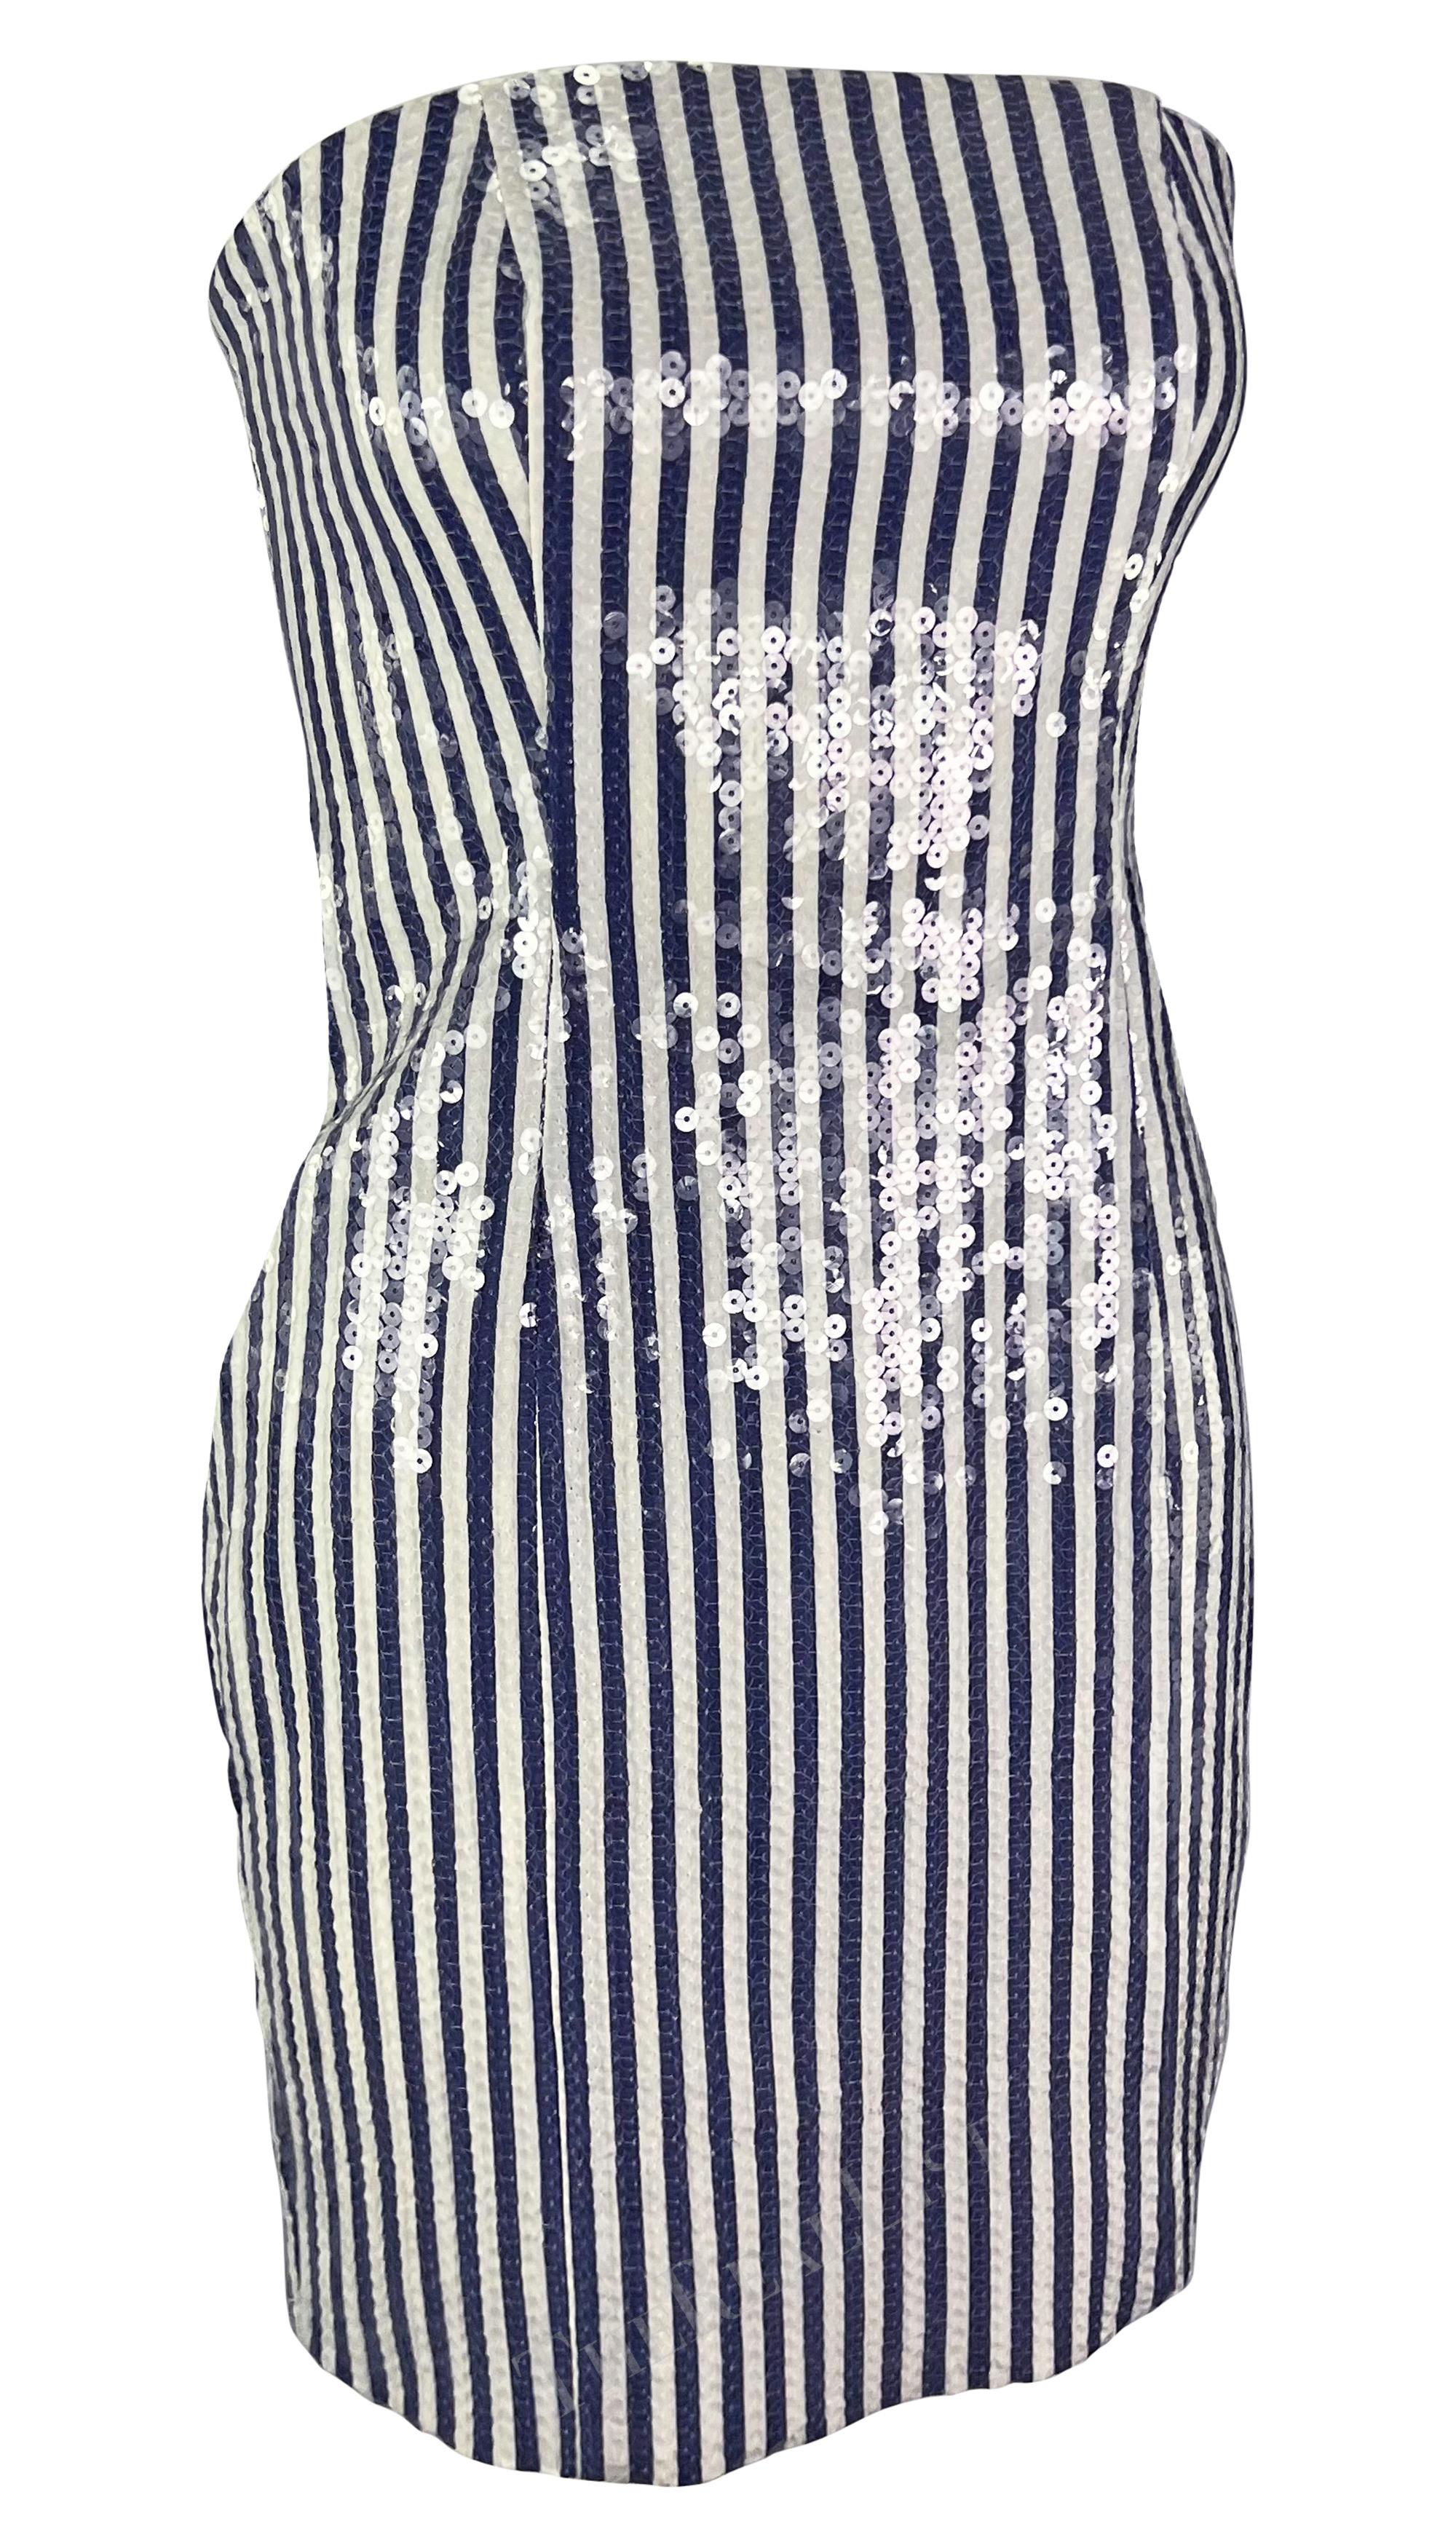 Michael Kors Sequin Dress - The Stripe.